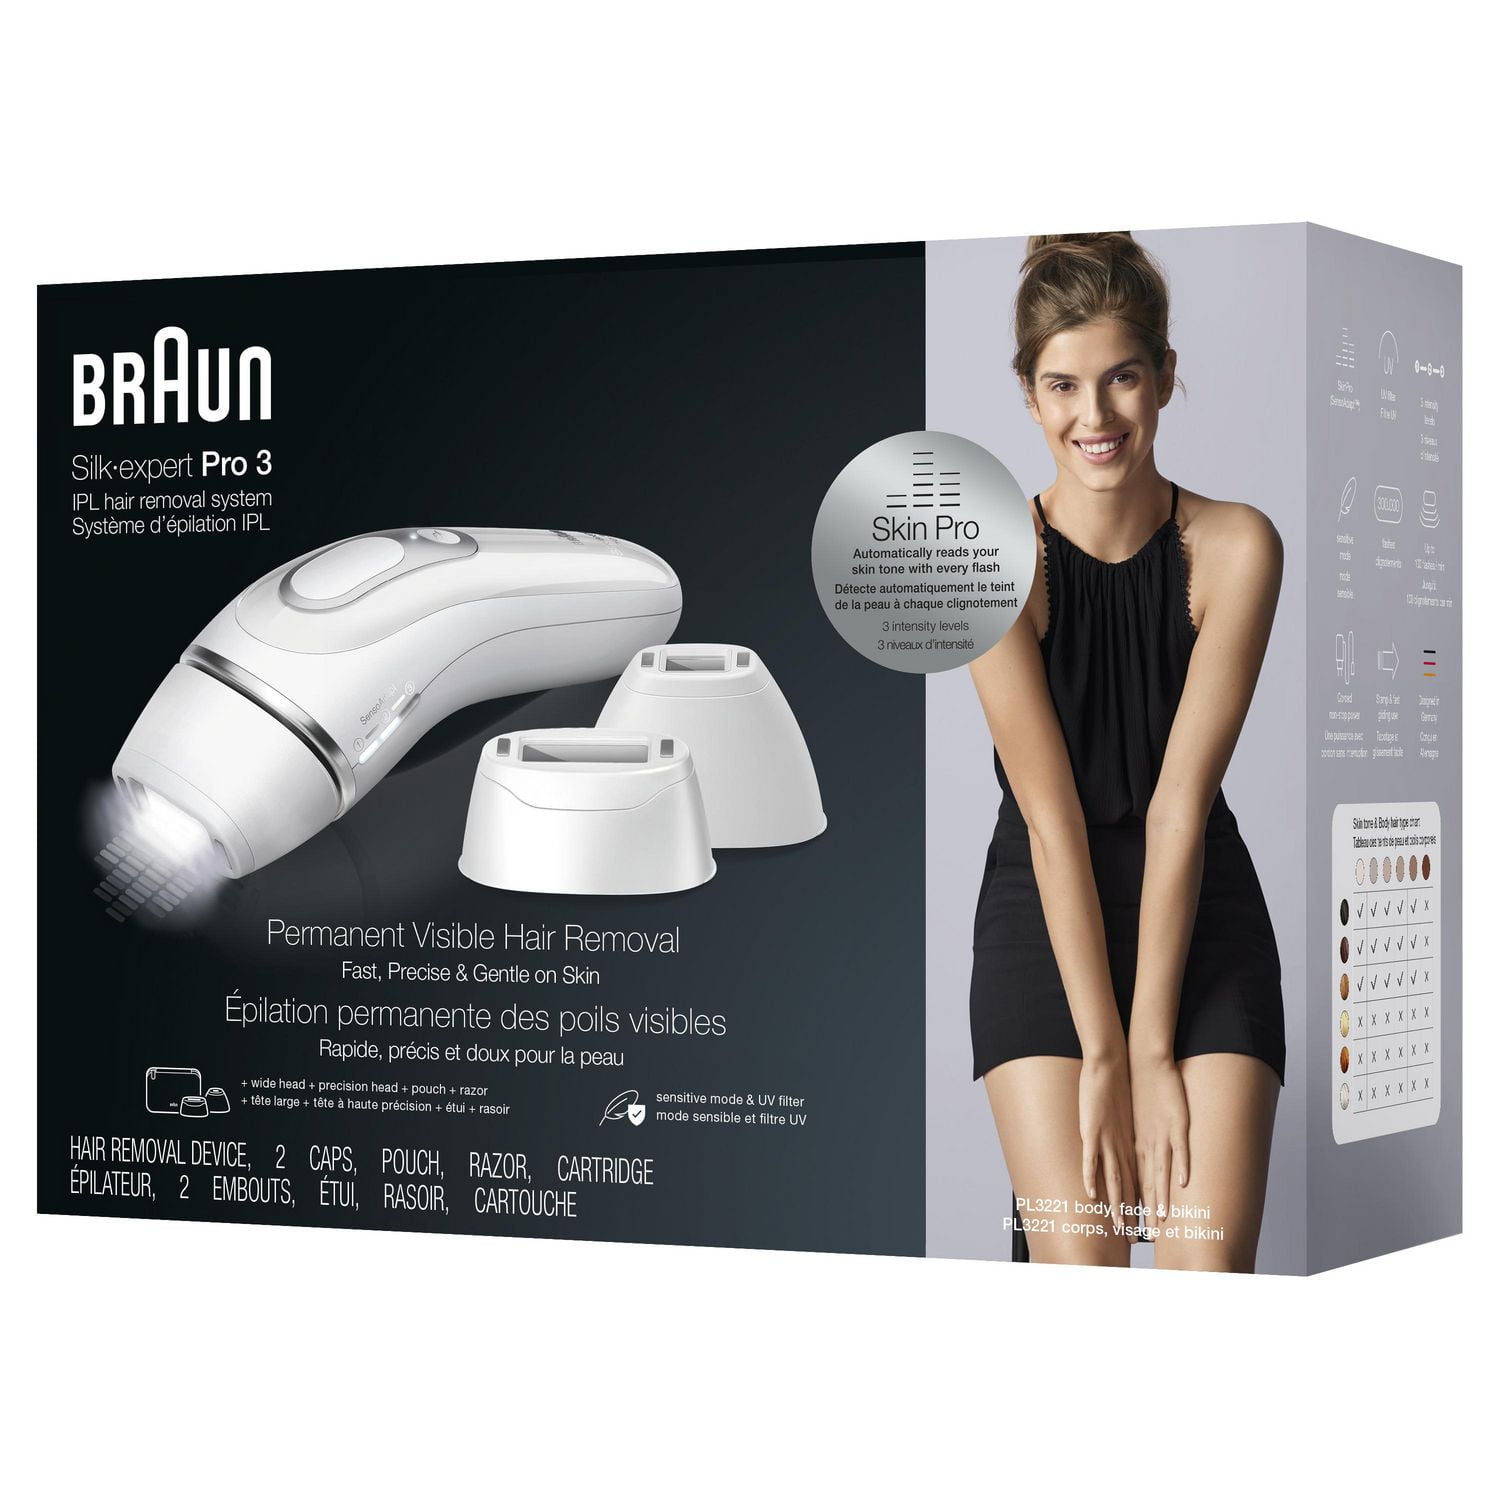 Customer Reviews: Braun Silk-expert Pro 5 IPL Epilator White/Gold